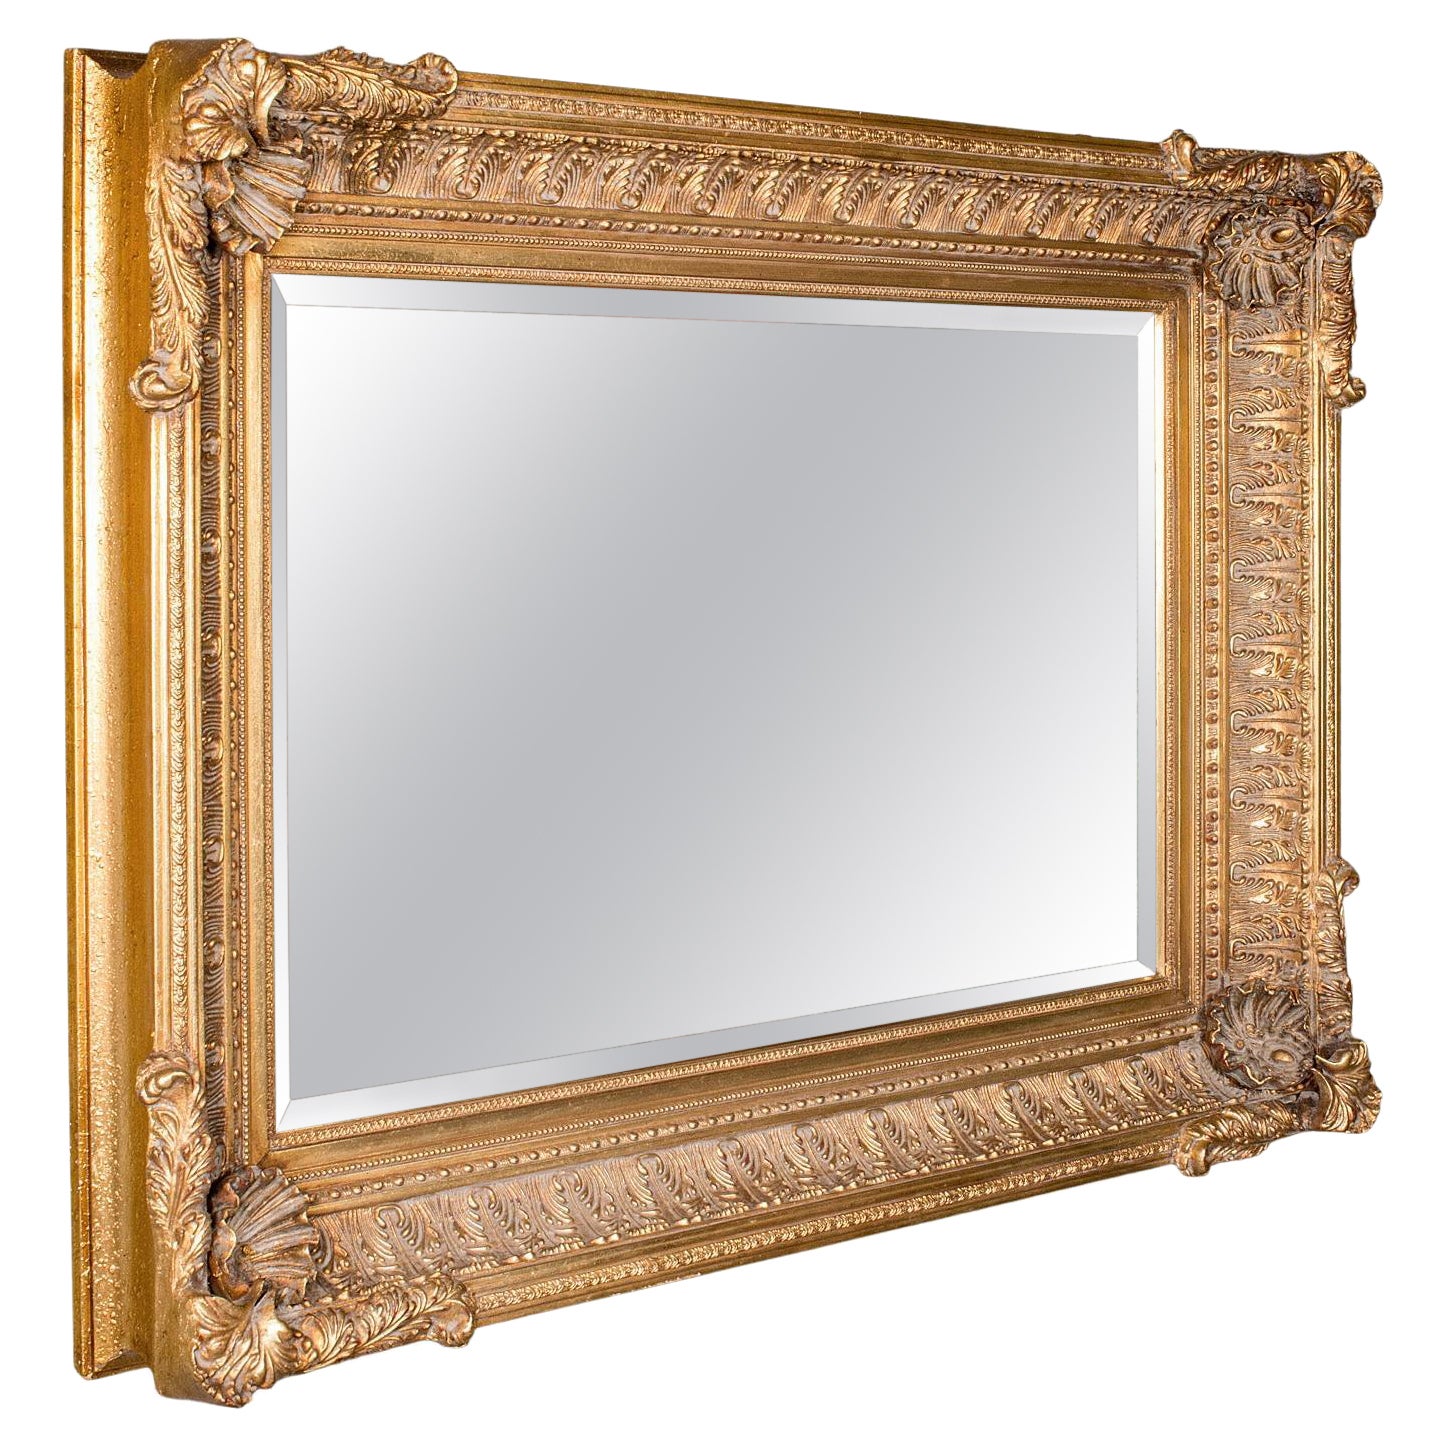 Large Vintage Renaissance Revival Wall Mirror, Continental, Giltwood, Decorative For Sale